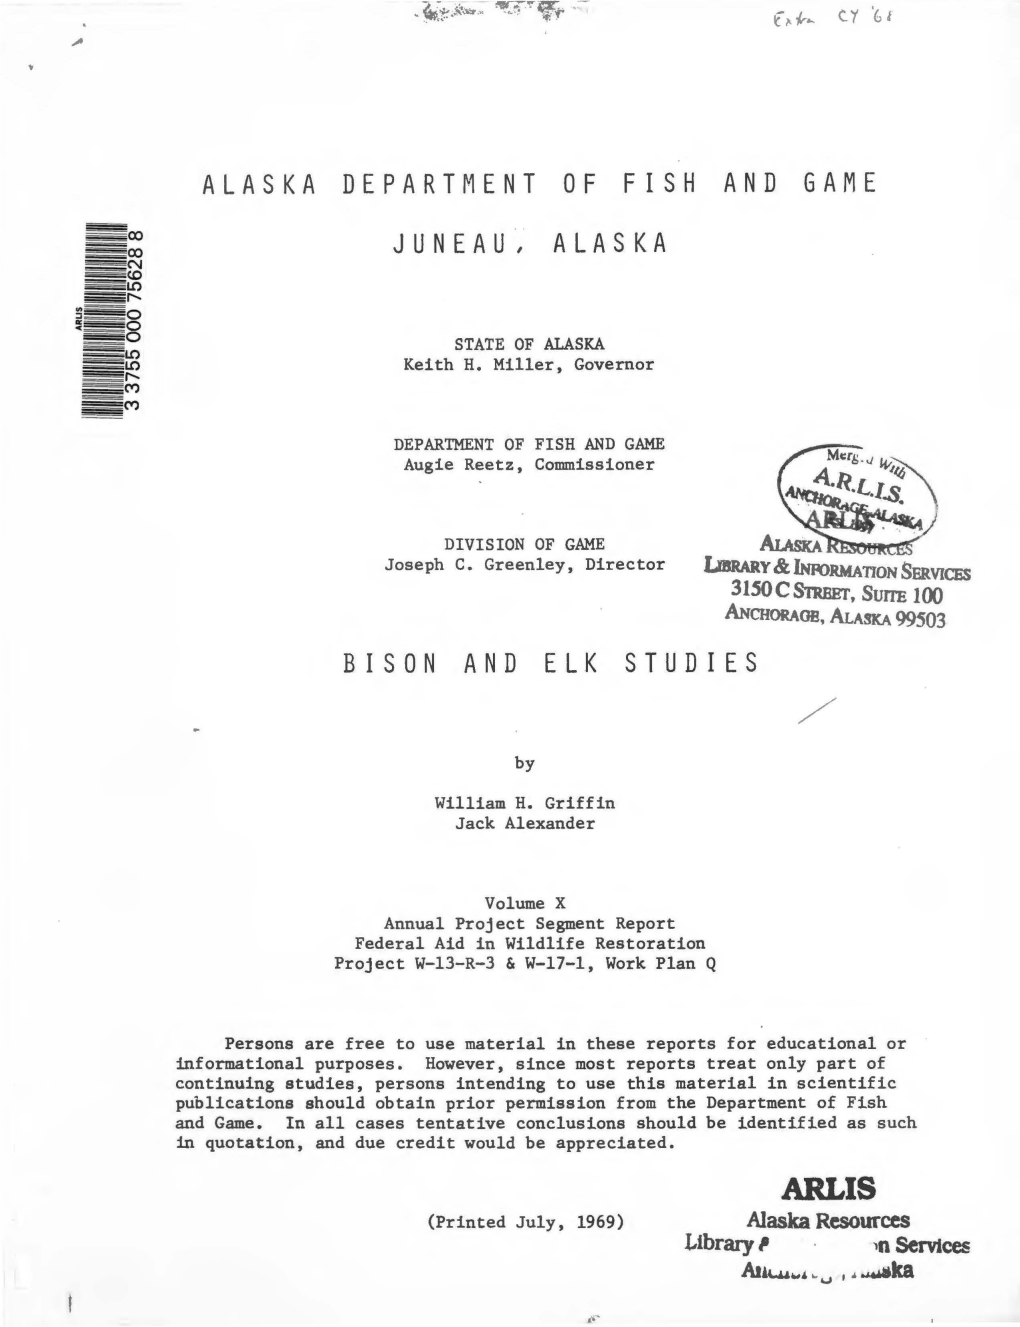 Bison and Elk Studies, Volume X, Annual Project Segment Report